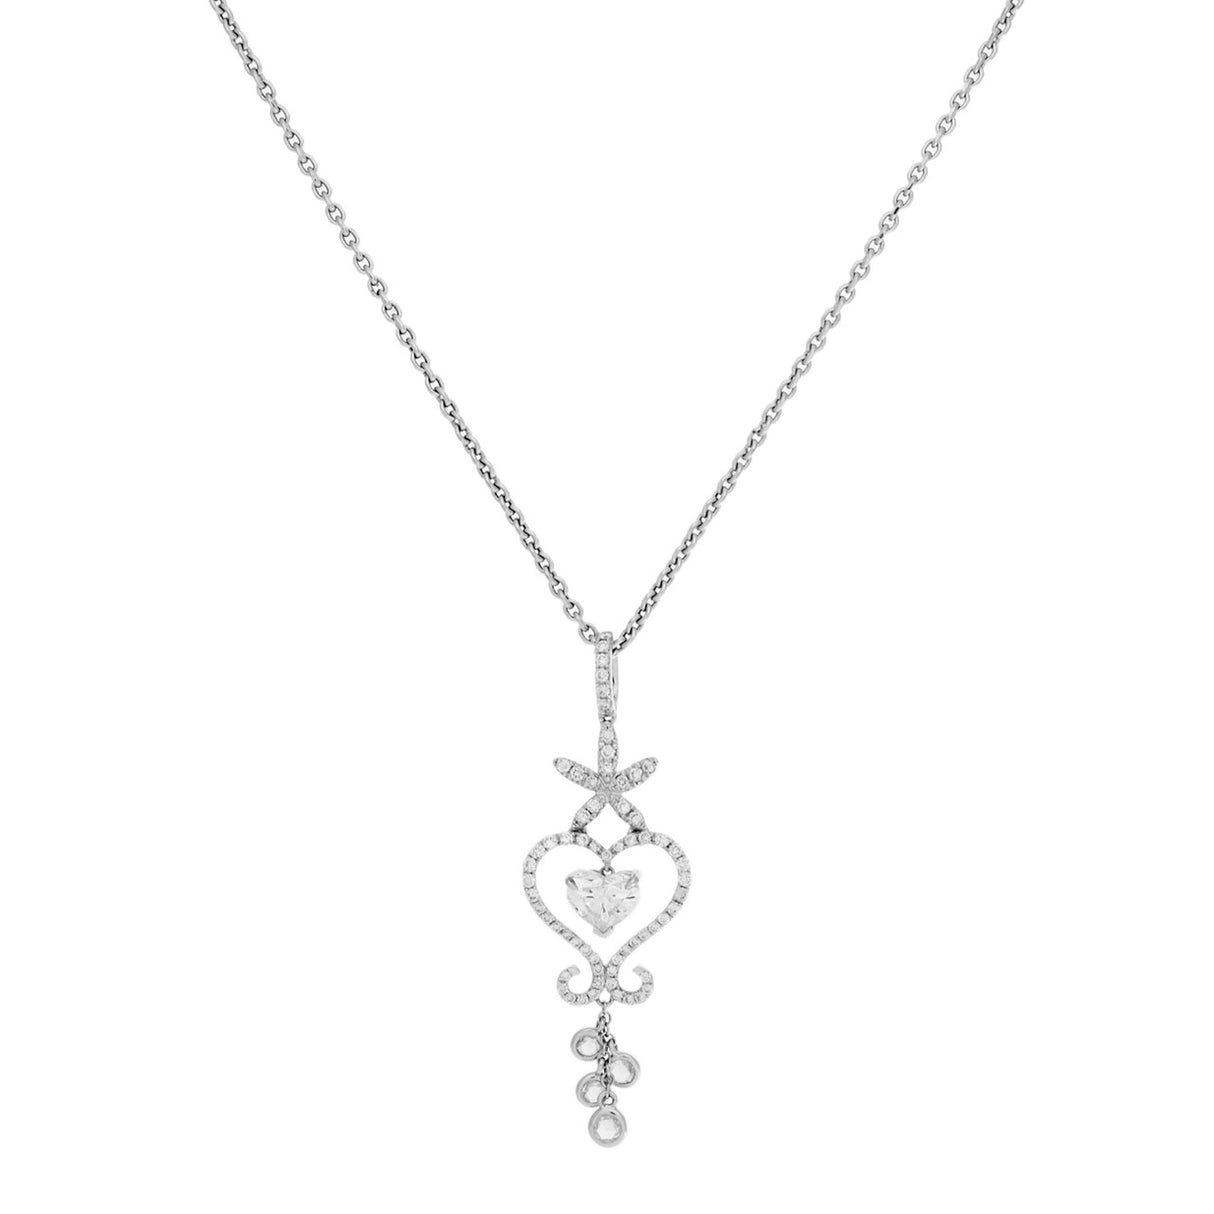 18K White Gold Heart Shaped Diamond Pendant Necklace